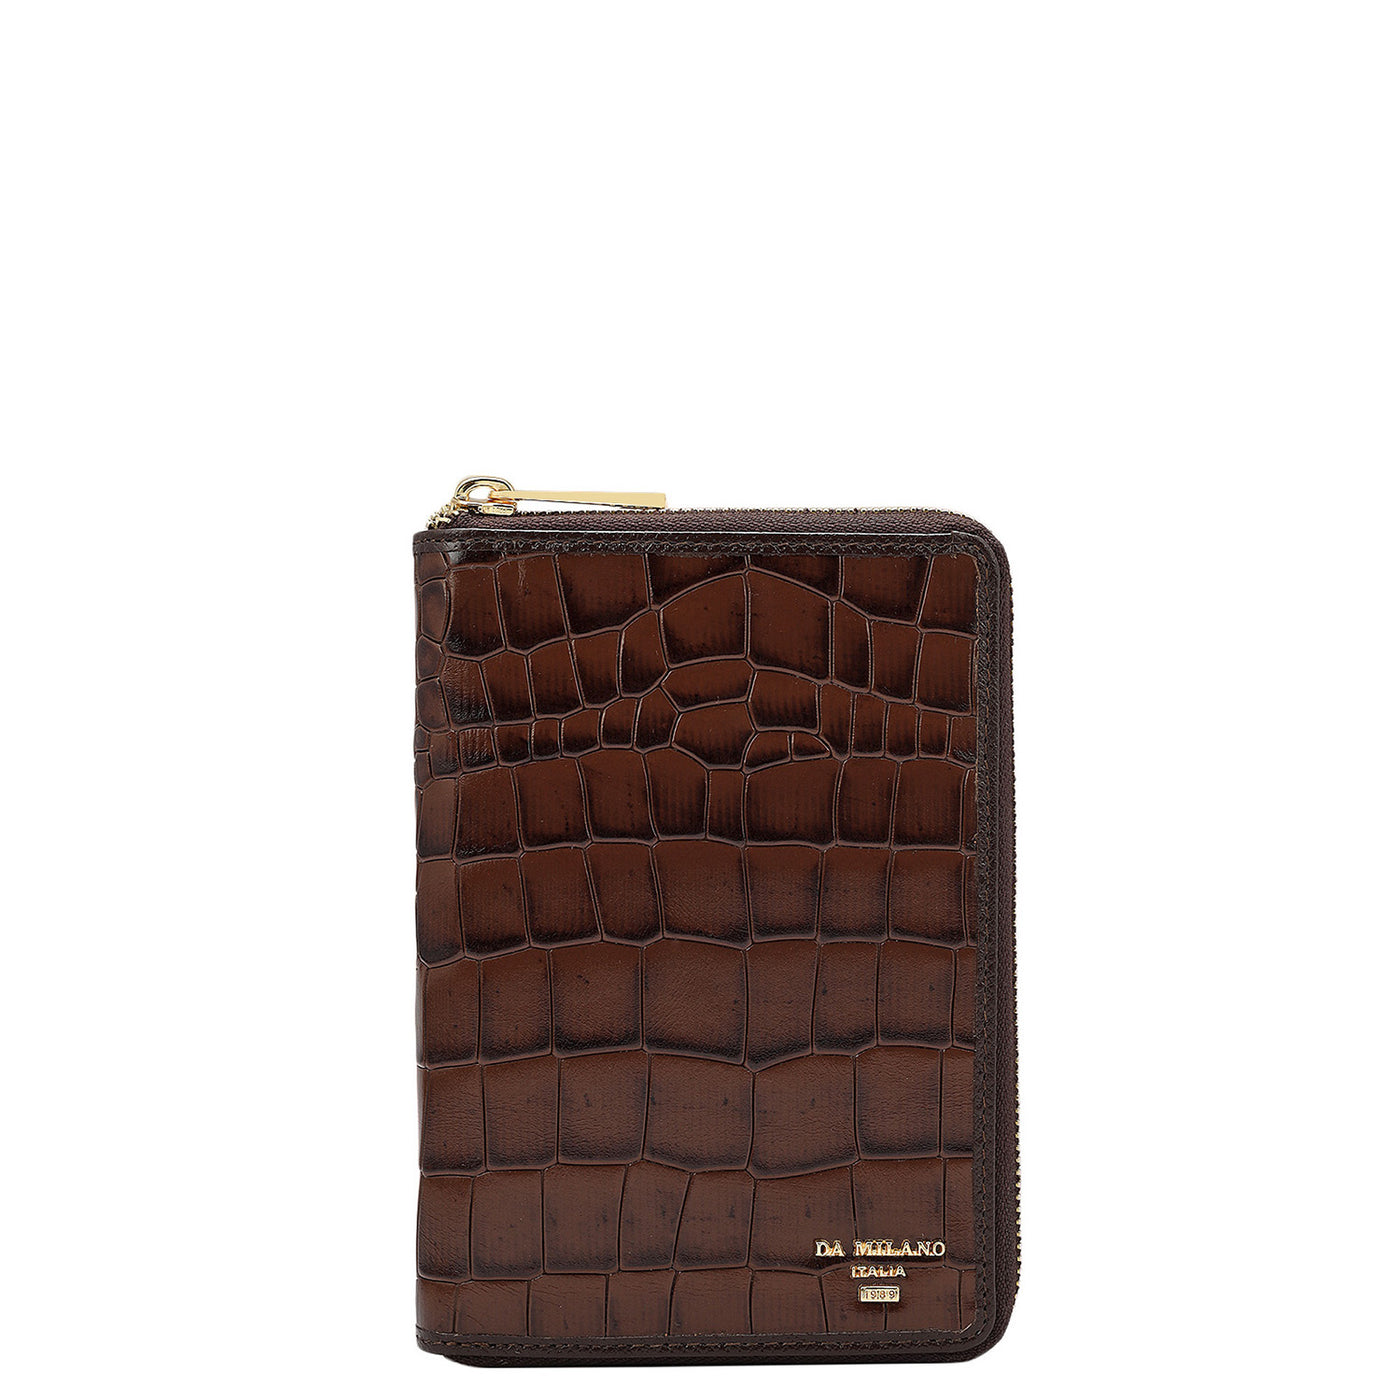 Croco Leather Passport Case - Brown